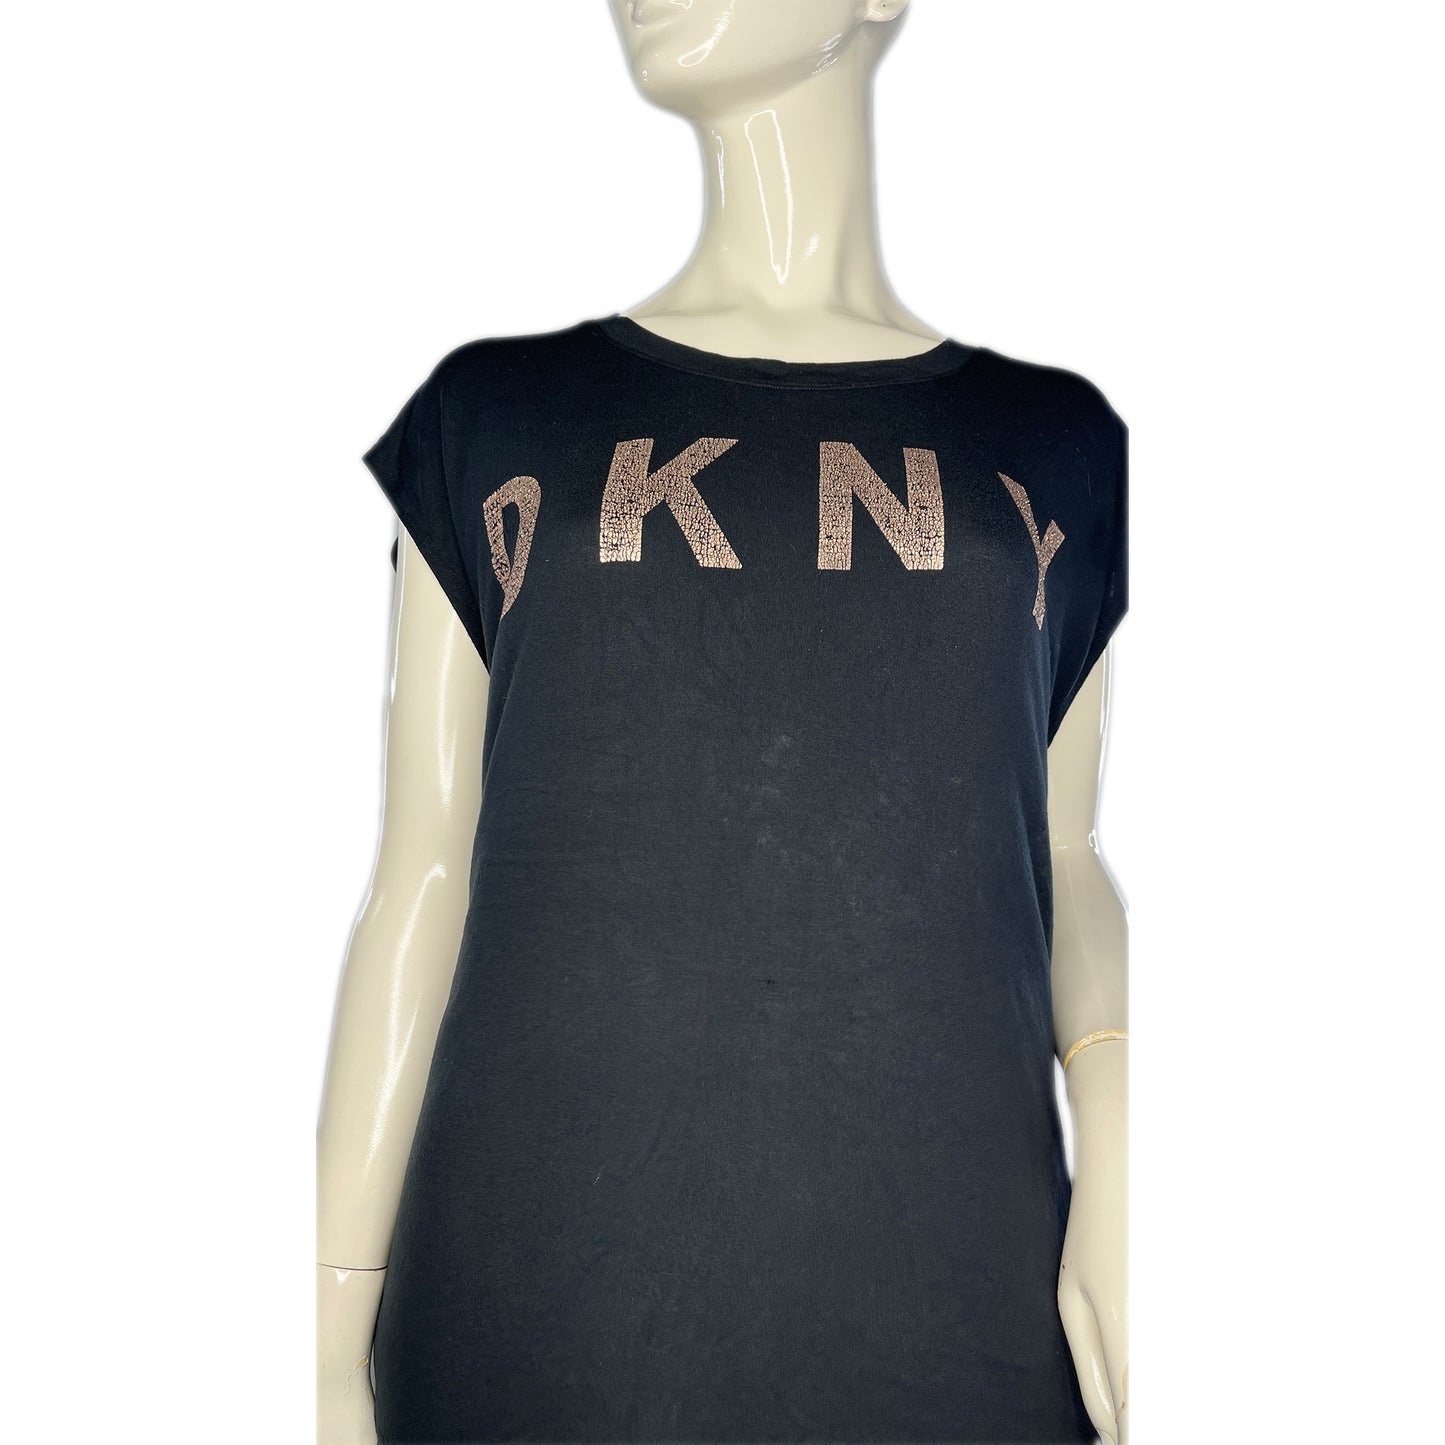 DKNY Top Short Sleeves Black, Rose Gold Size XL SKU 000236-10